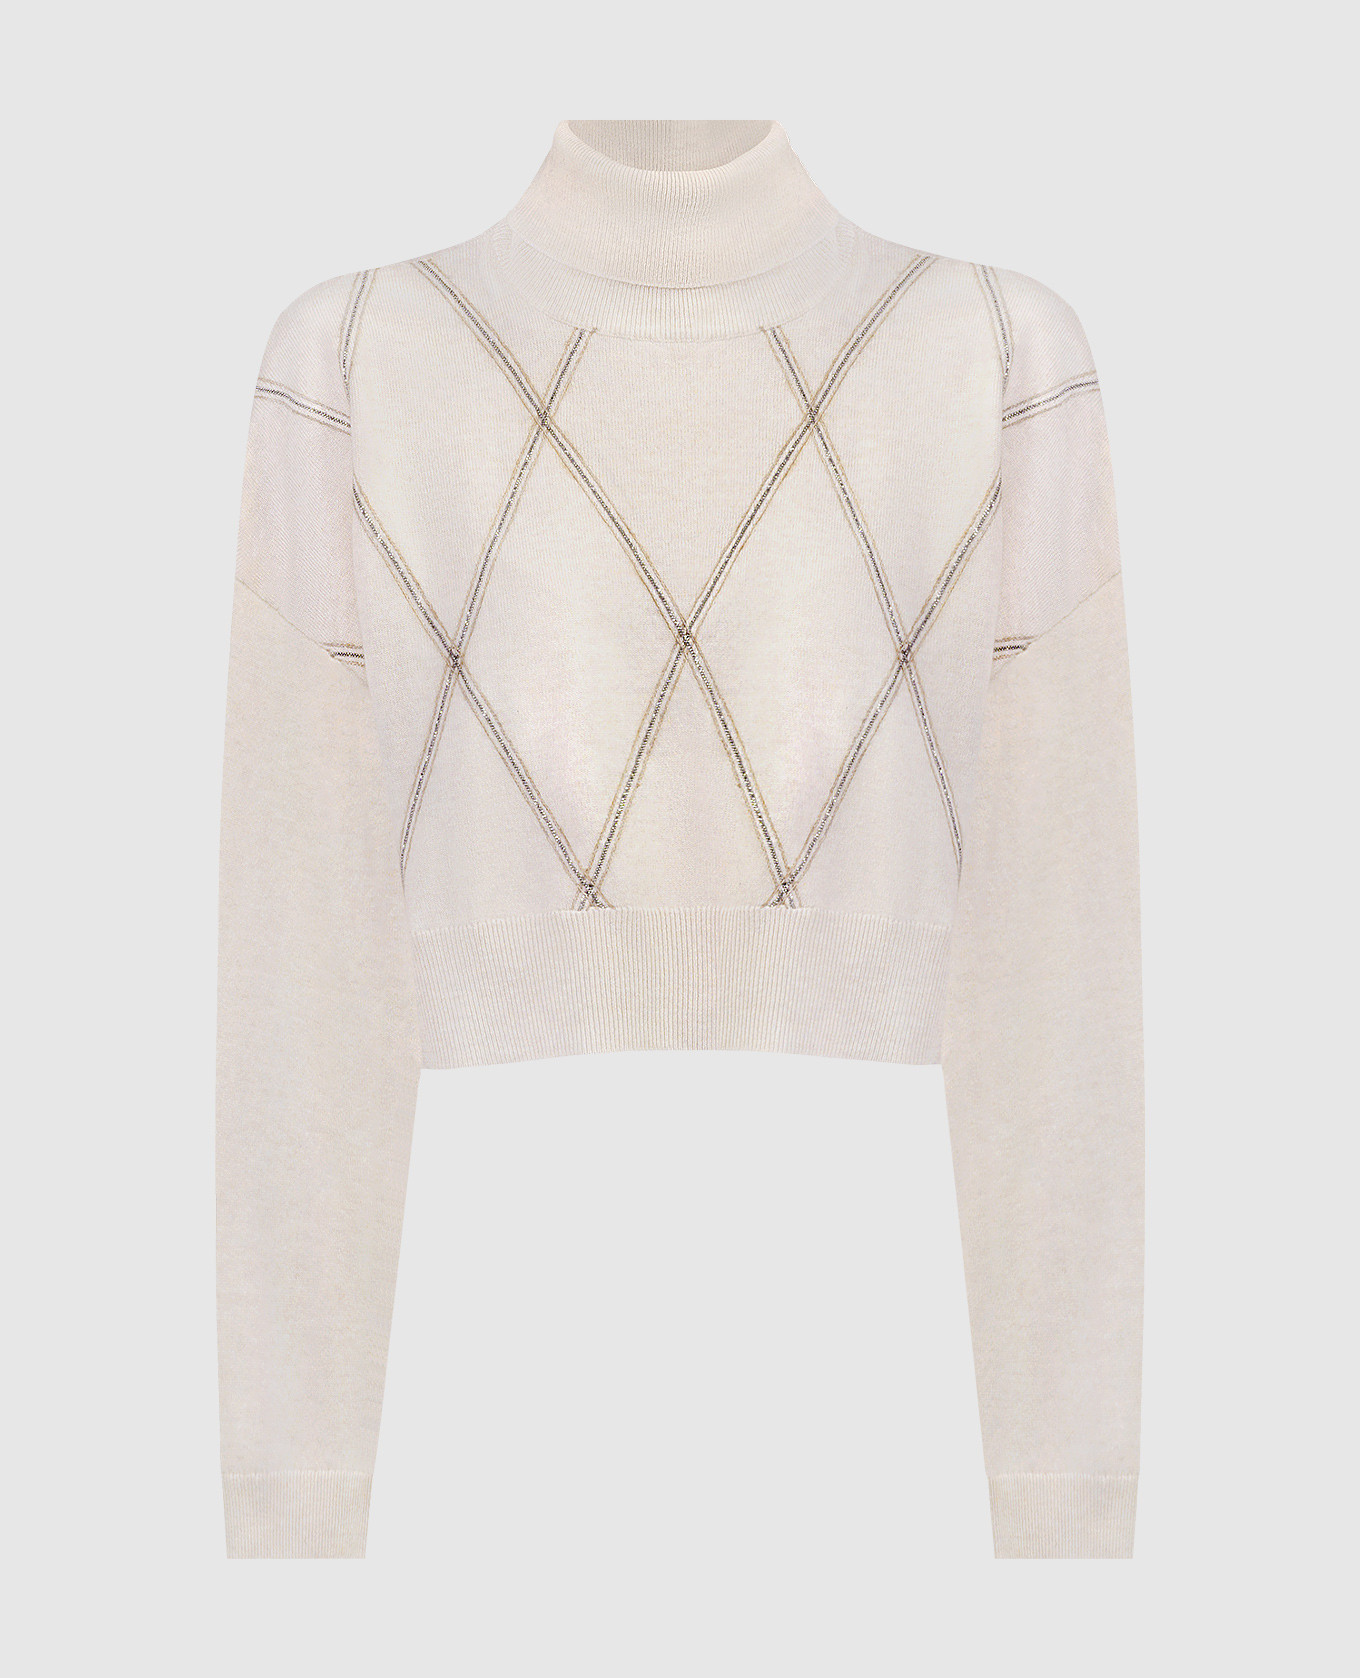 Beige sweater in a geometric pattern with a monil chain made of ekolatuny